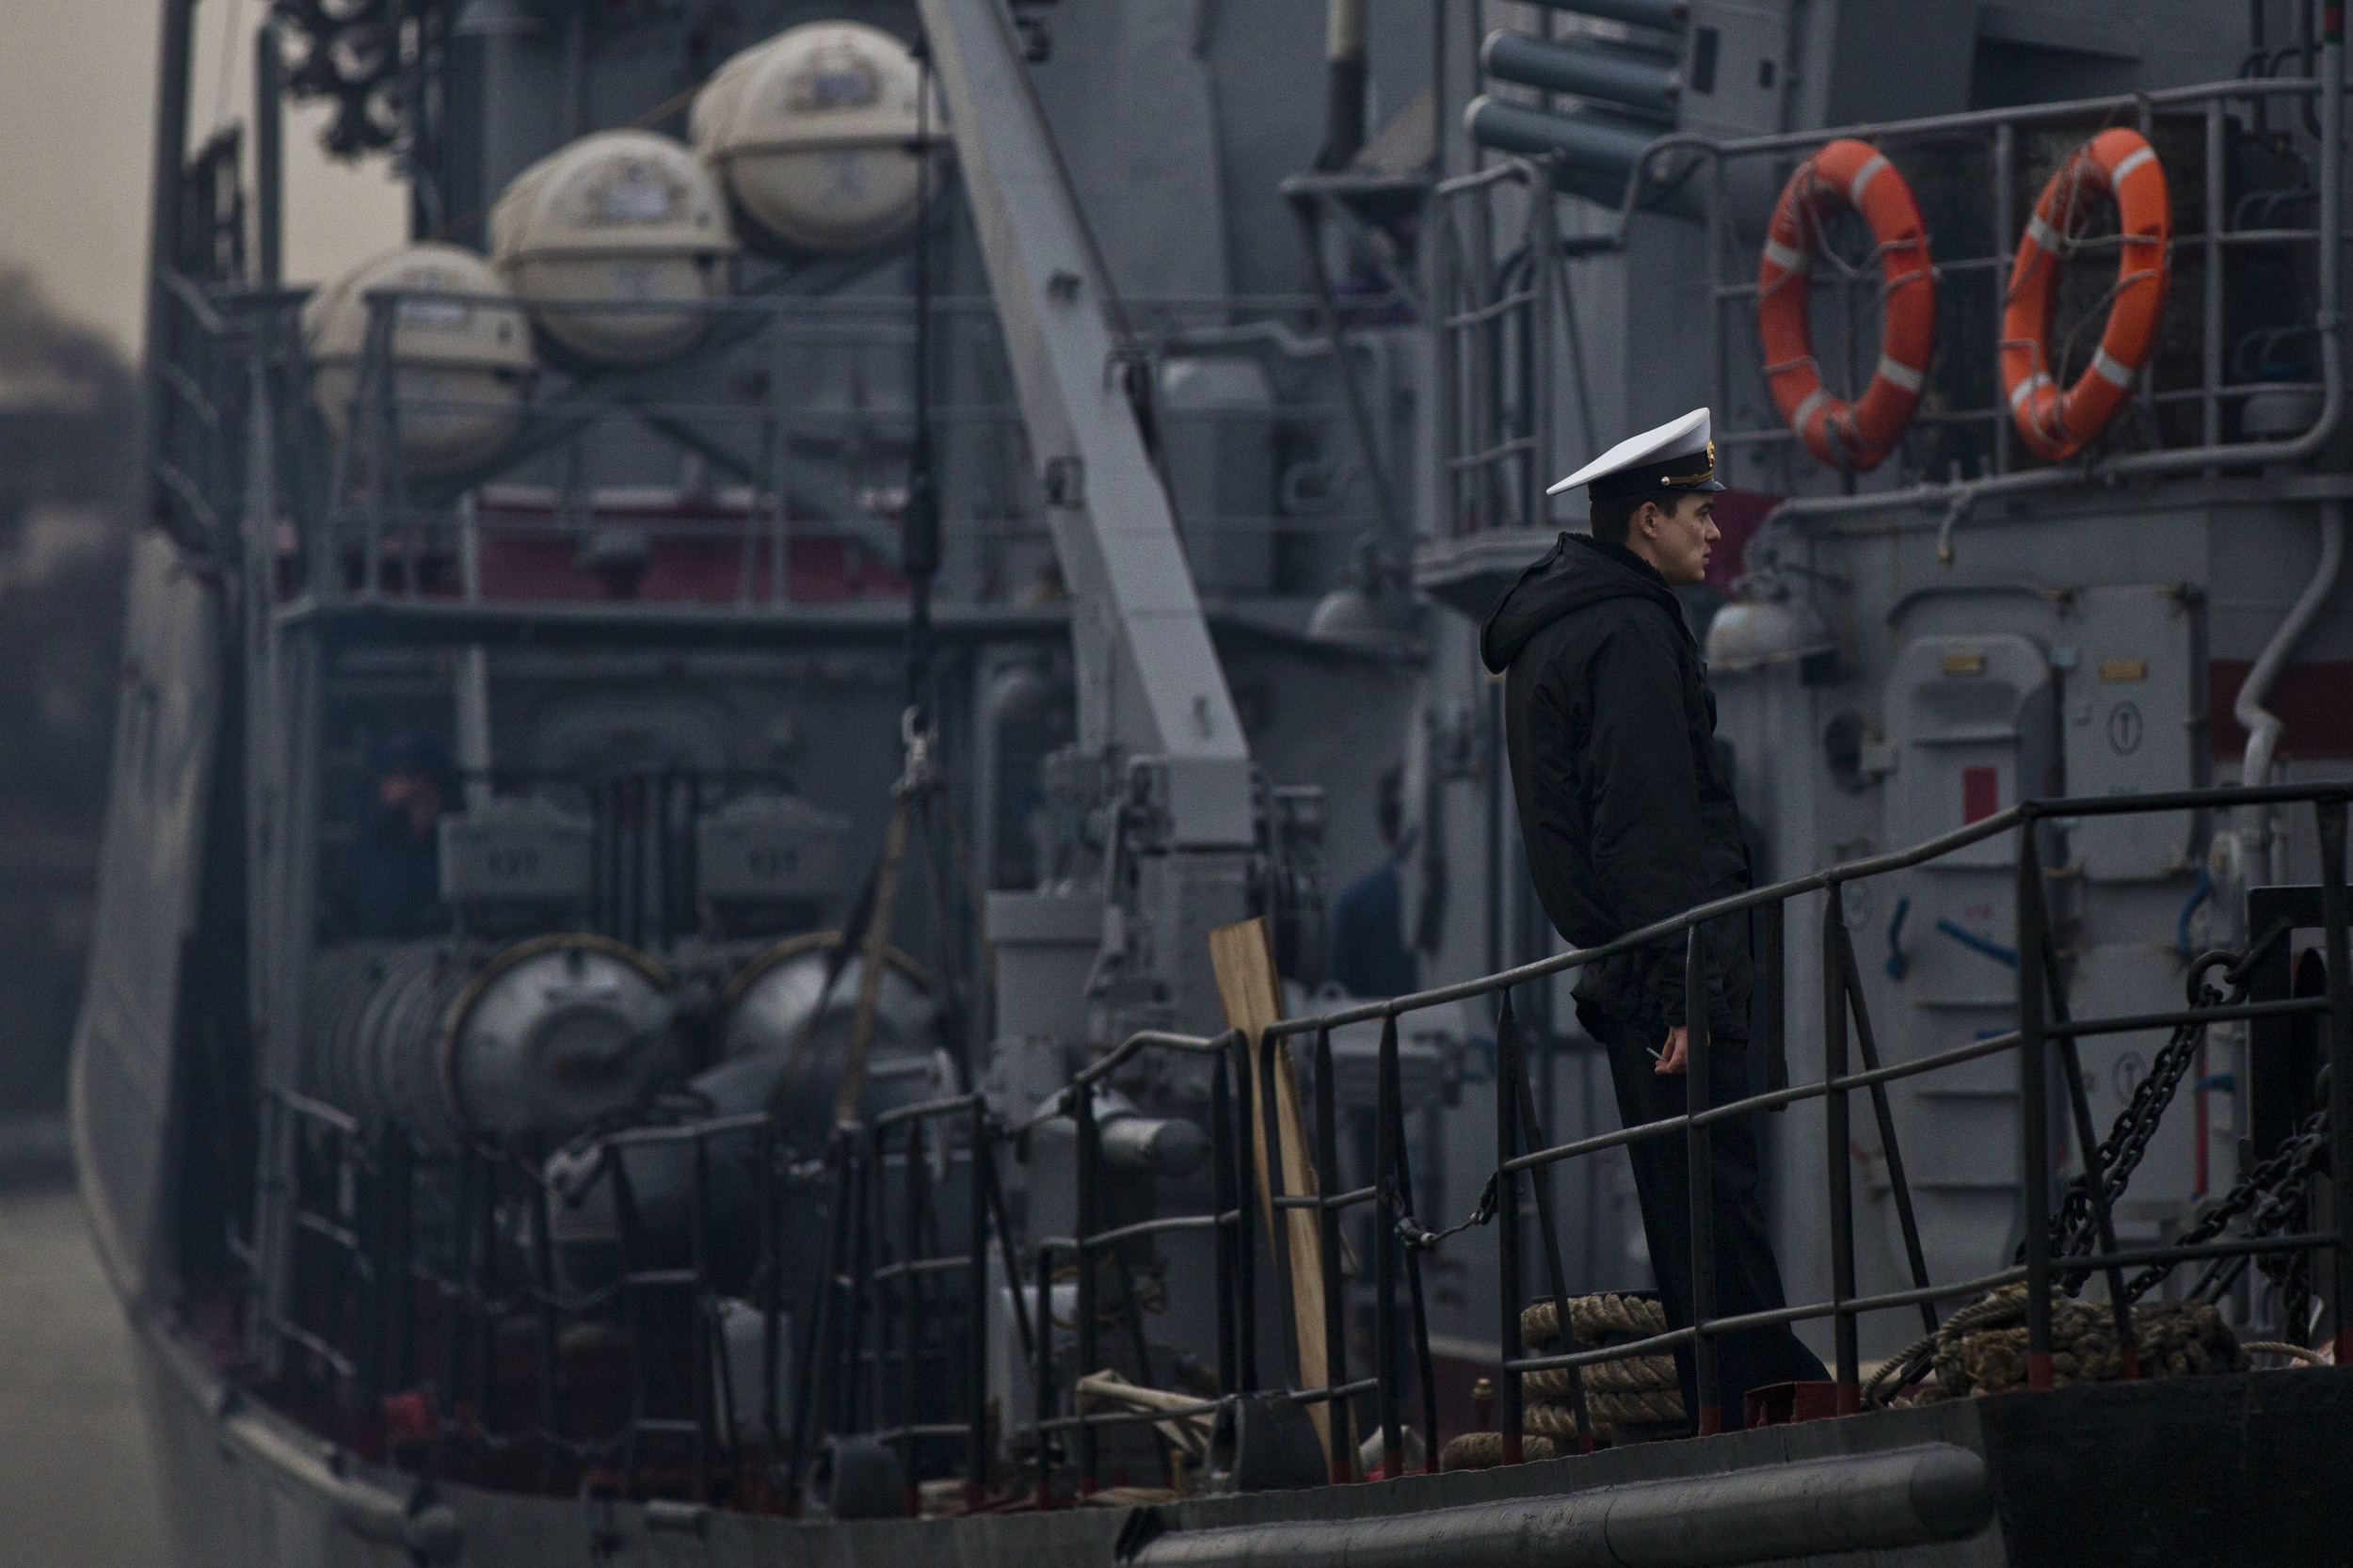  Ukrainian sailor is seen smocking on board of his vessel as it is blocked by Russian ships near Sevatopol 